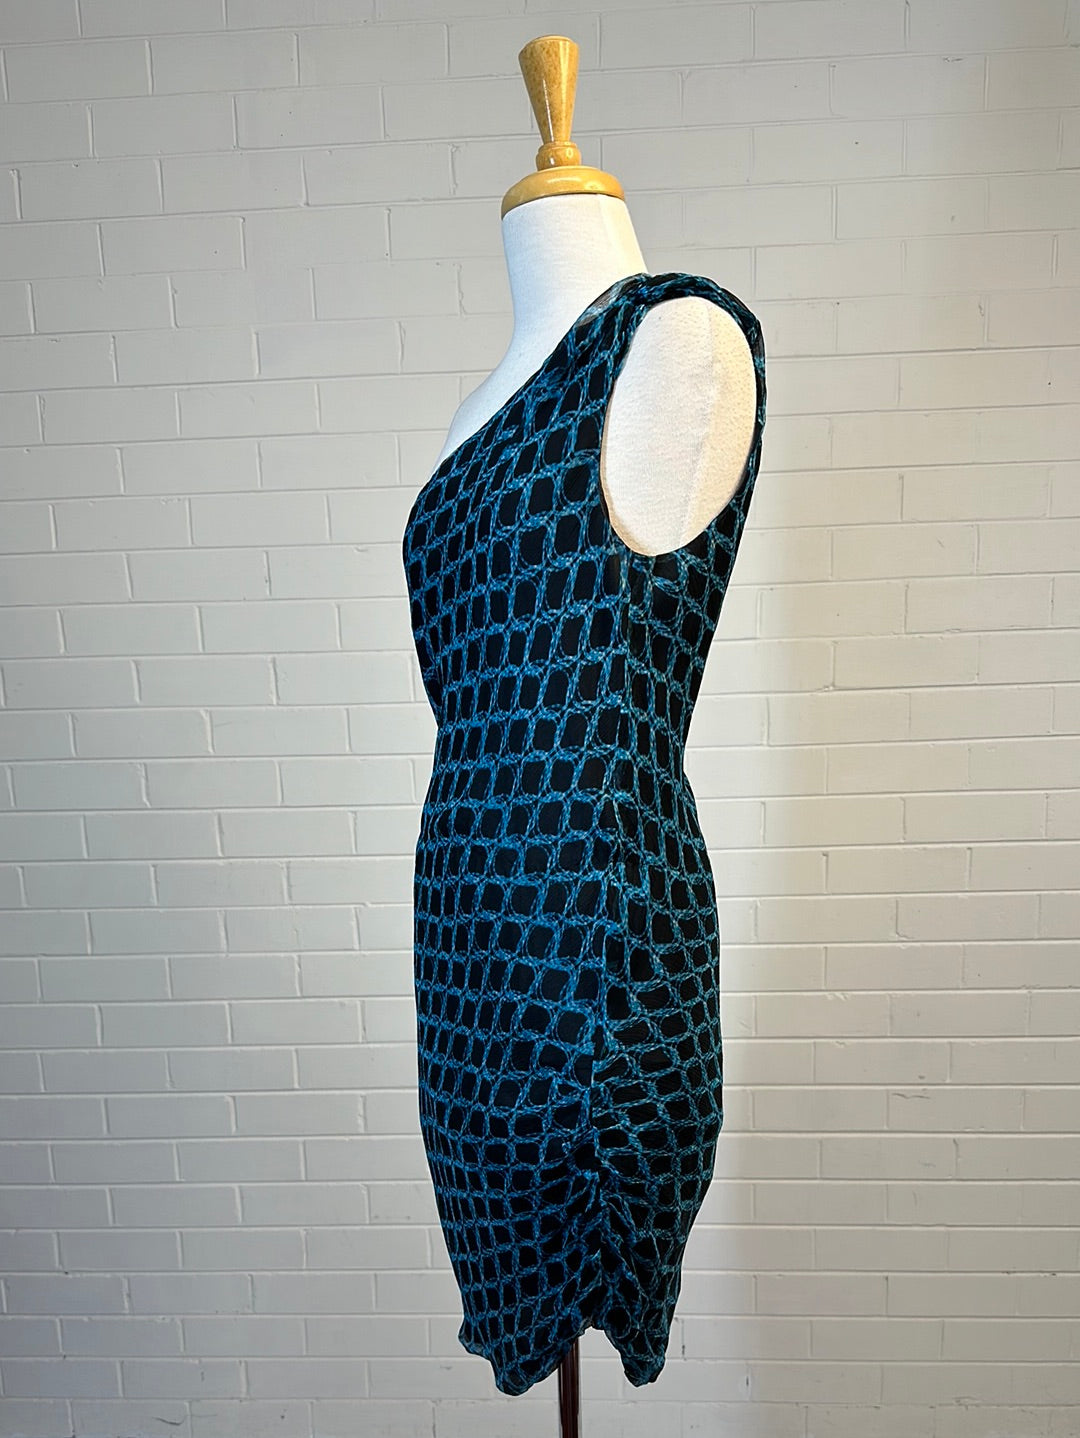 Halston Heritage | New York | dress | size 8 | knee length | 100% silk